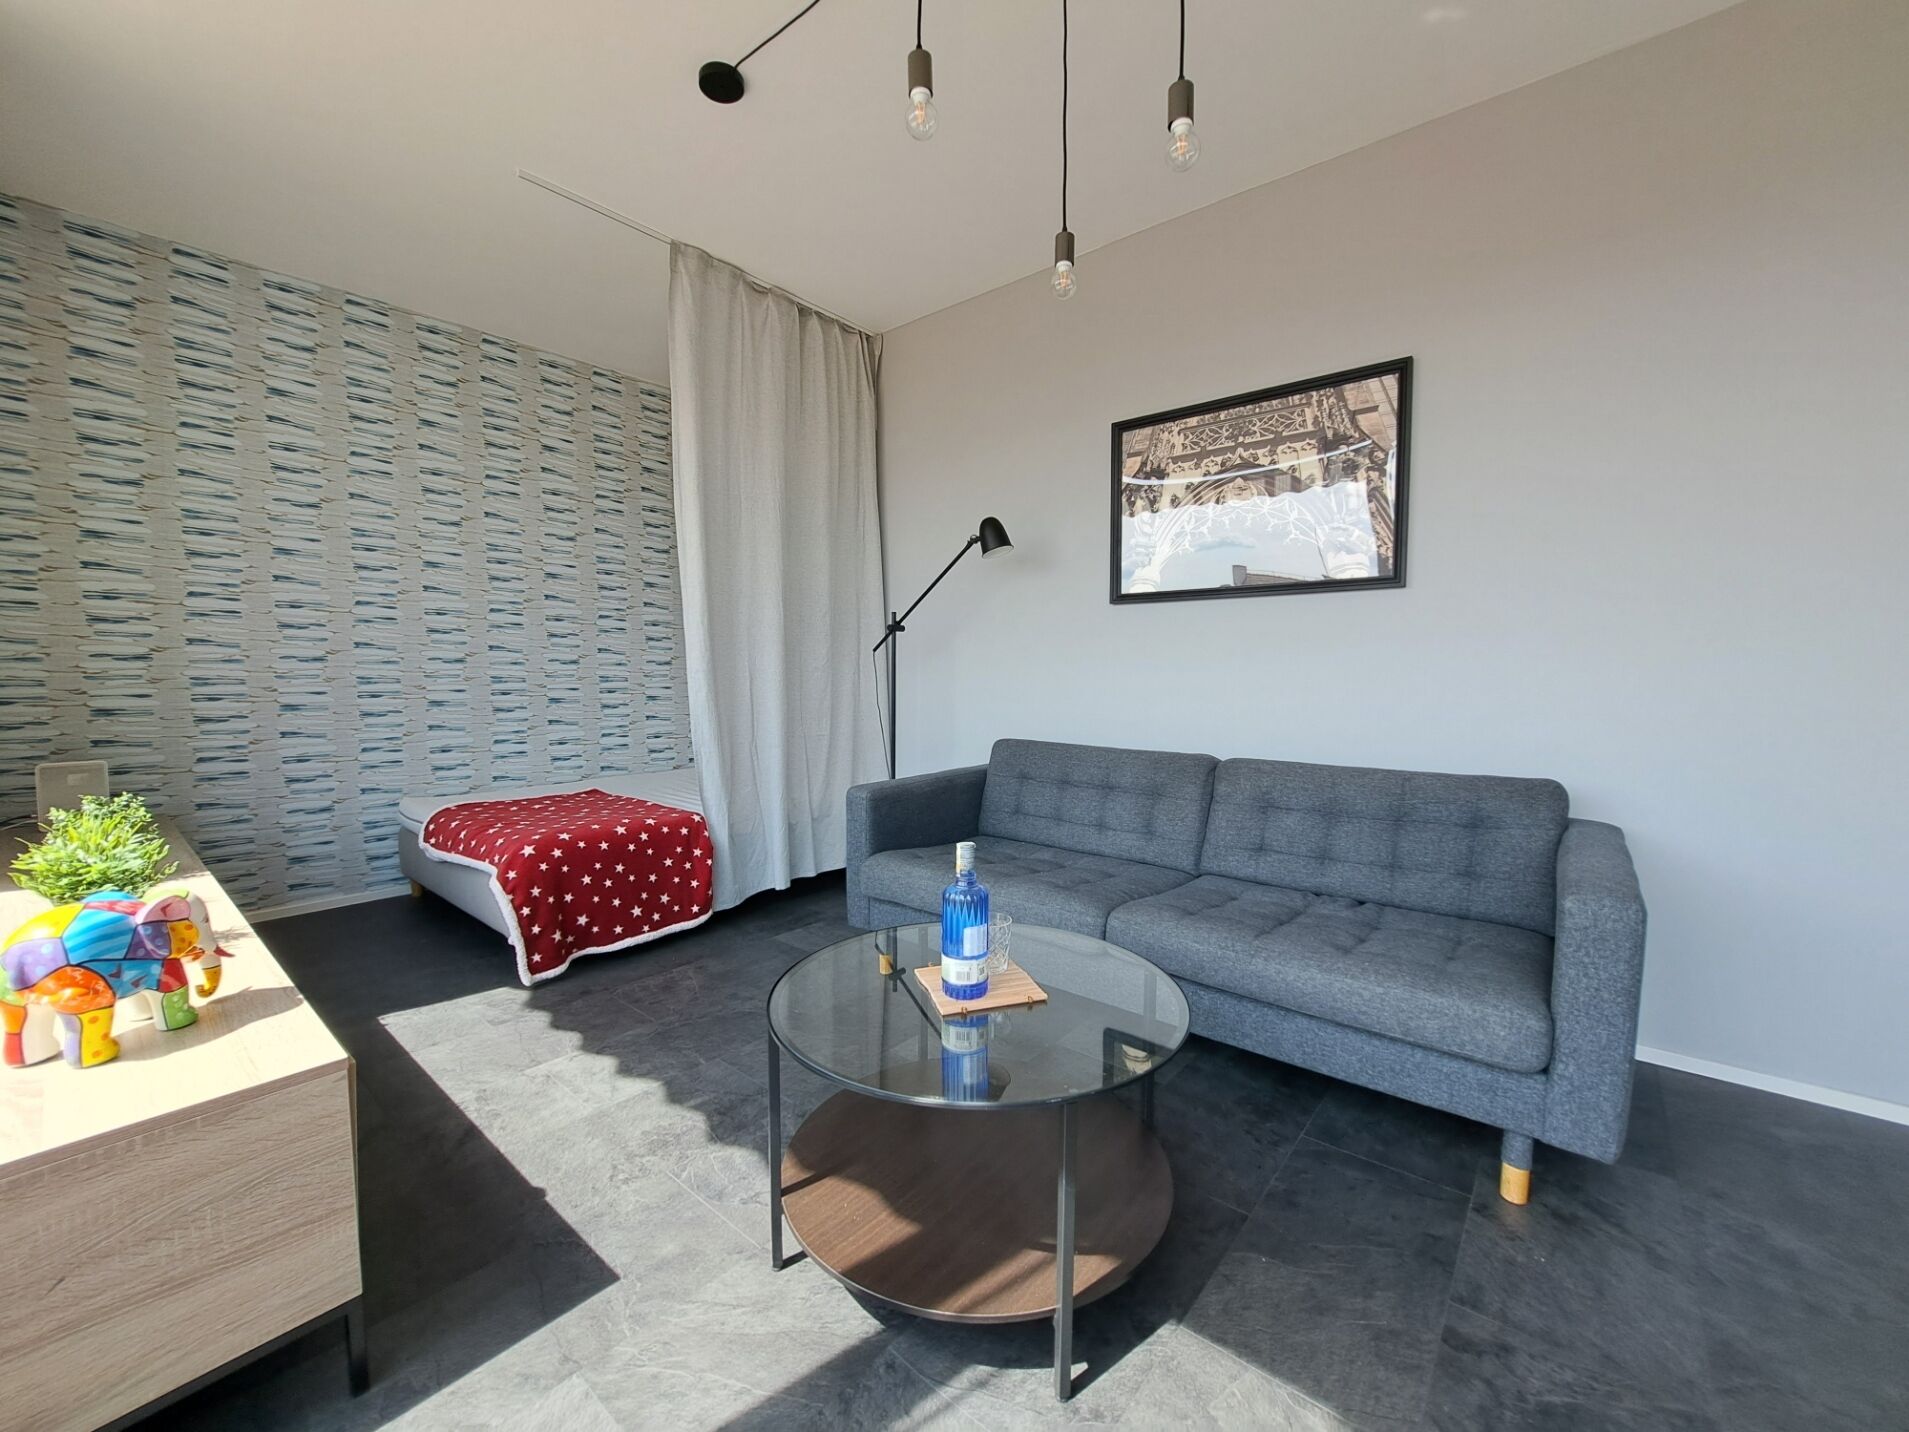 Nový vybavený byt 1+kk s terasou v širším centru Brna